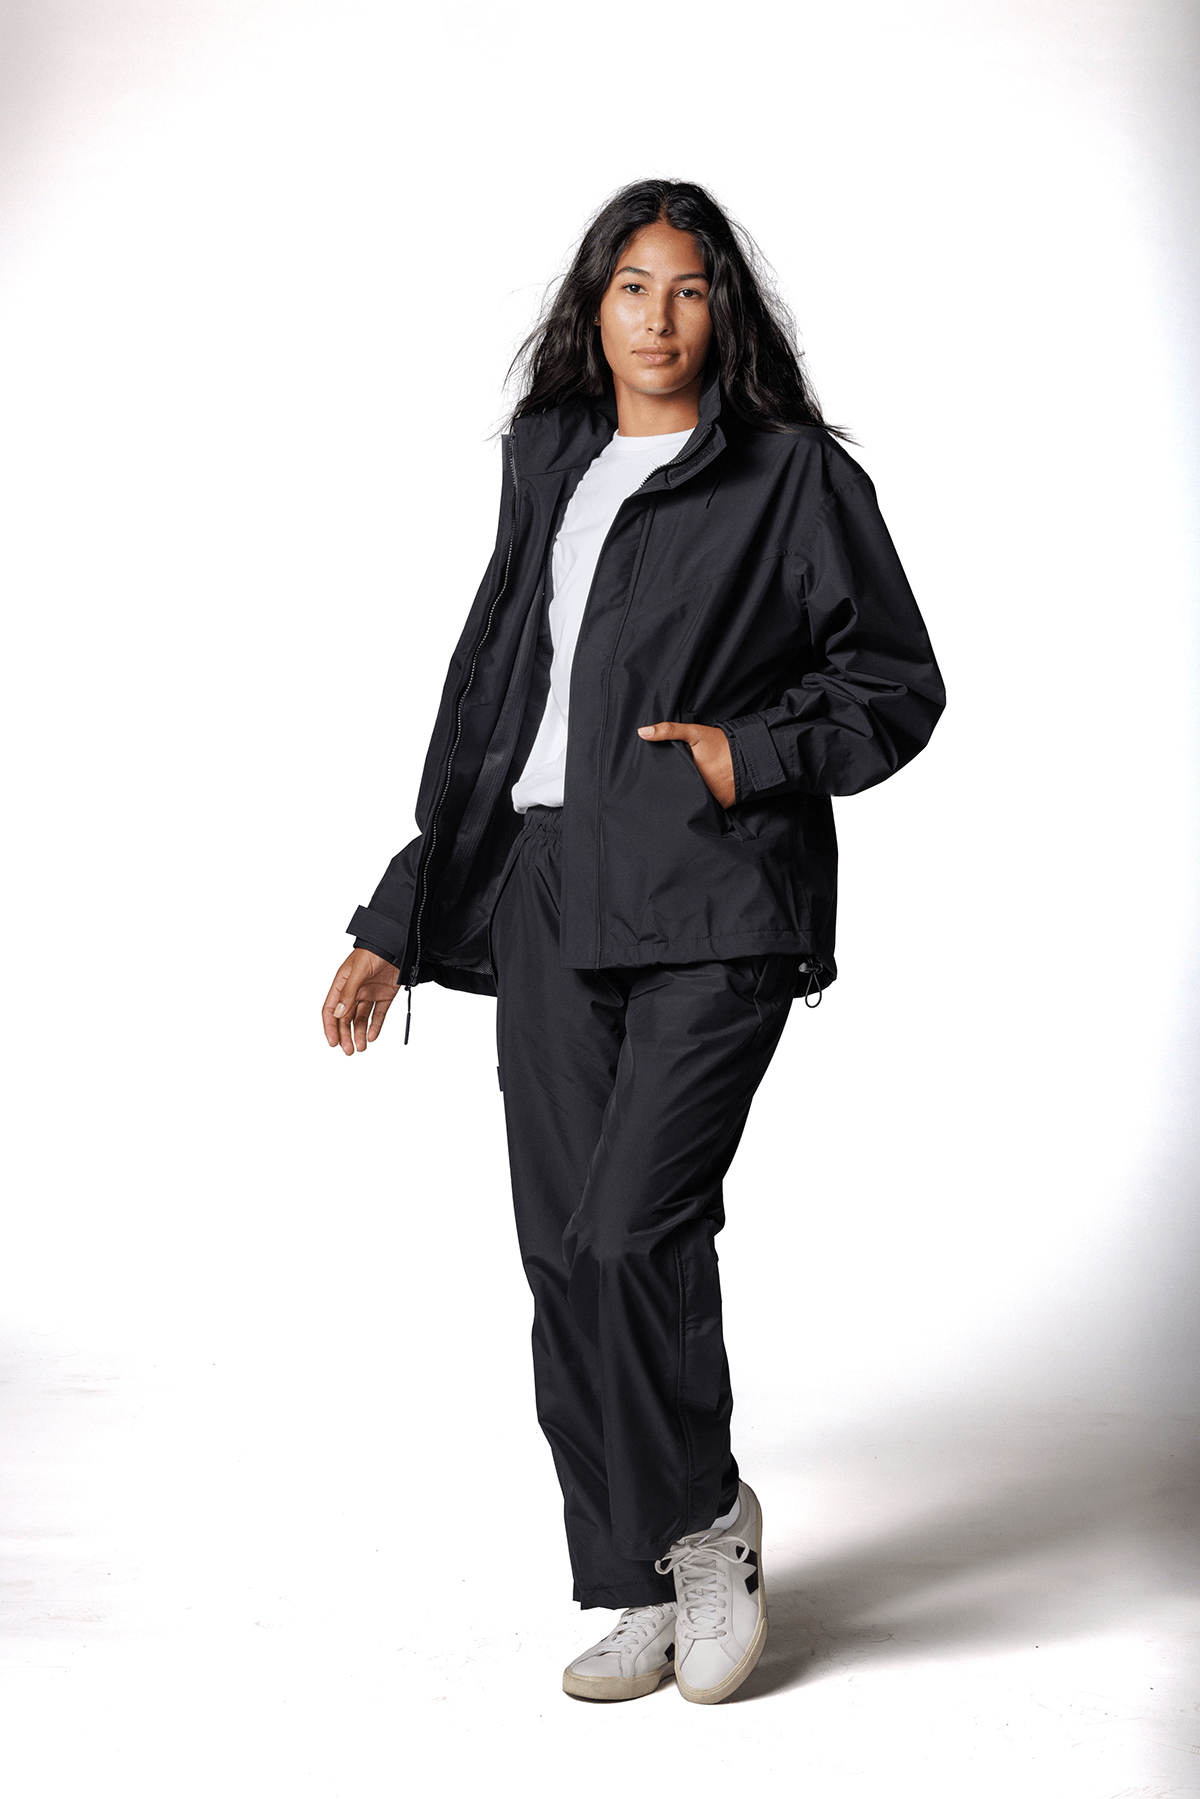 Black Boathouse Blitz GORE-TEX® Branded Waterproof Jacket on woman